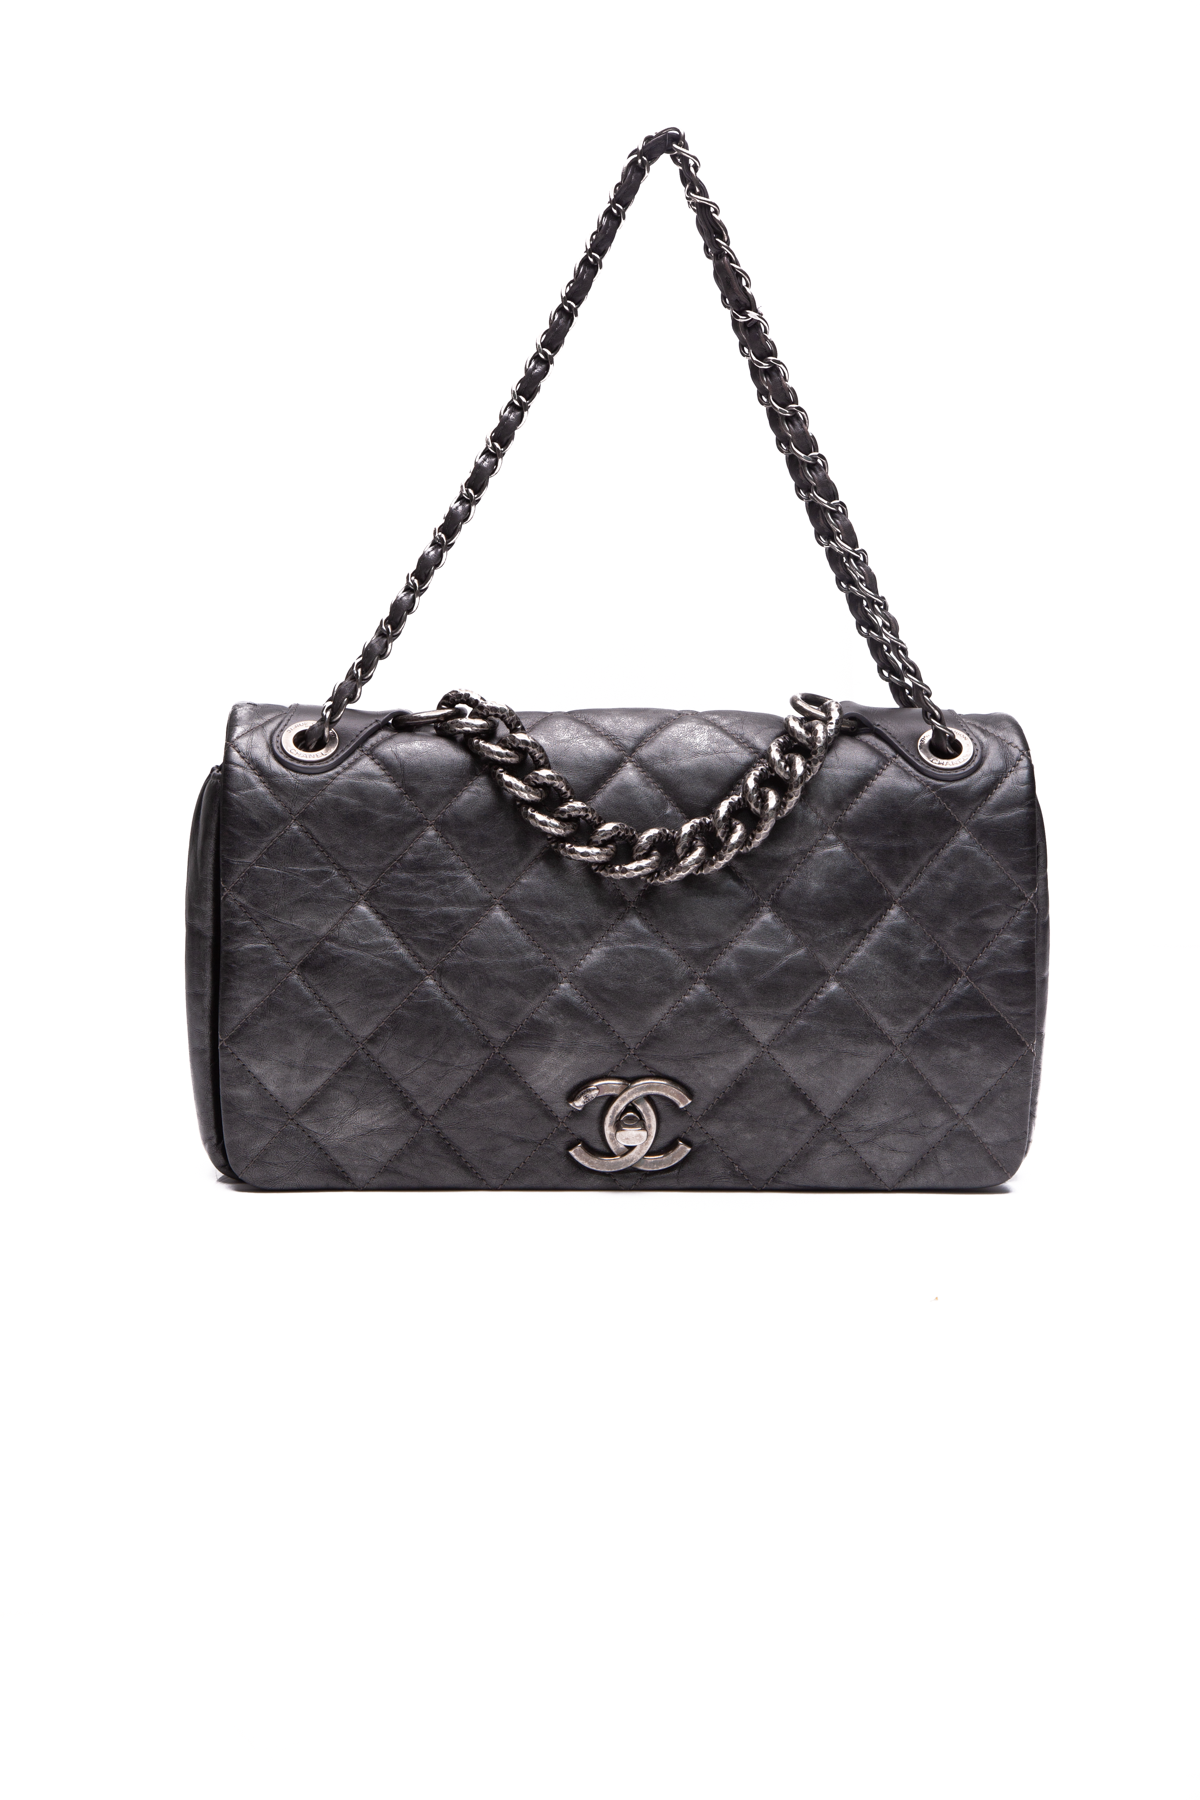 Chanel Pondicherry Medium Flap Bag - Couture USA